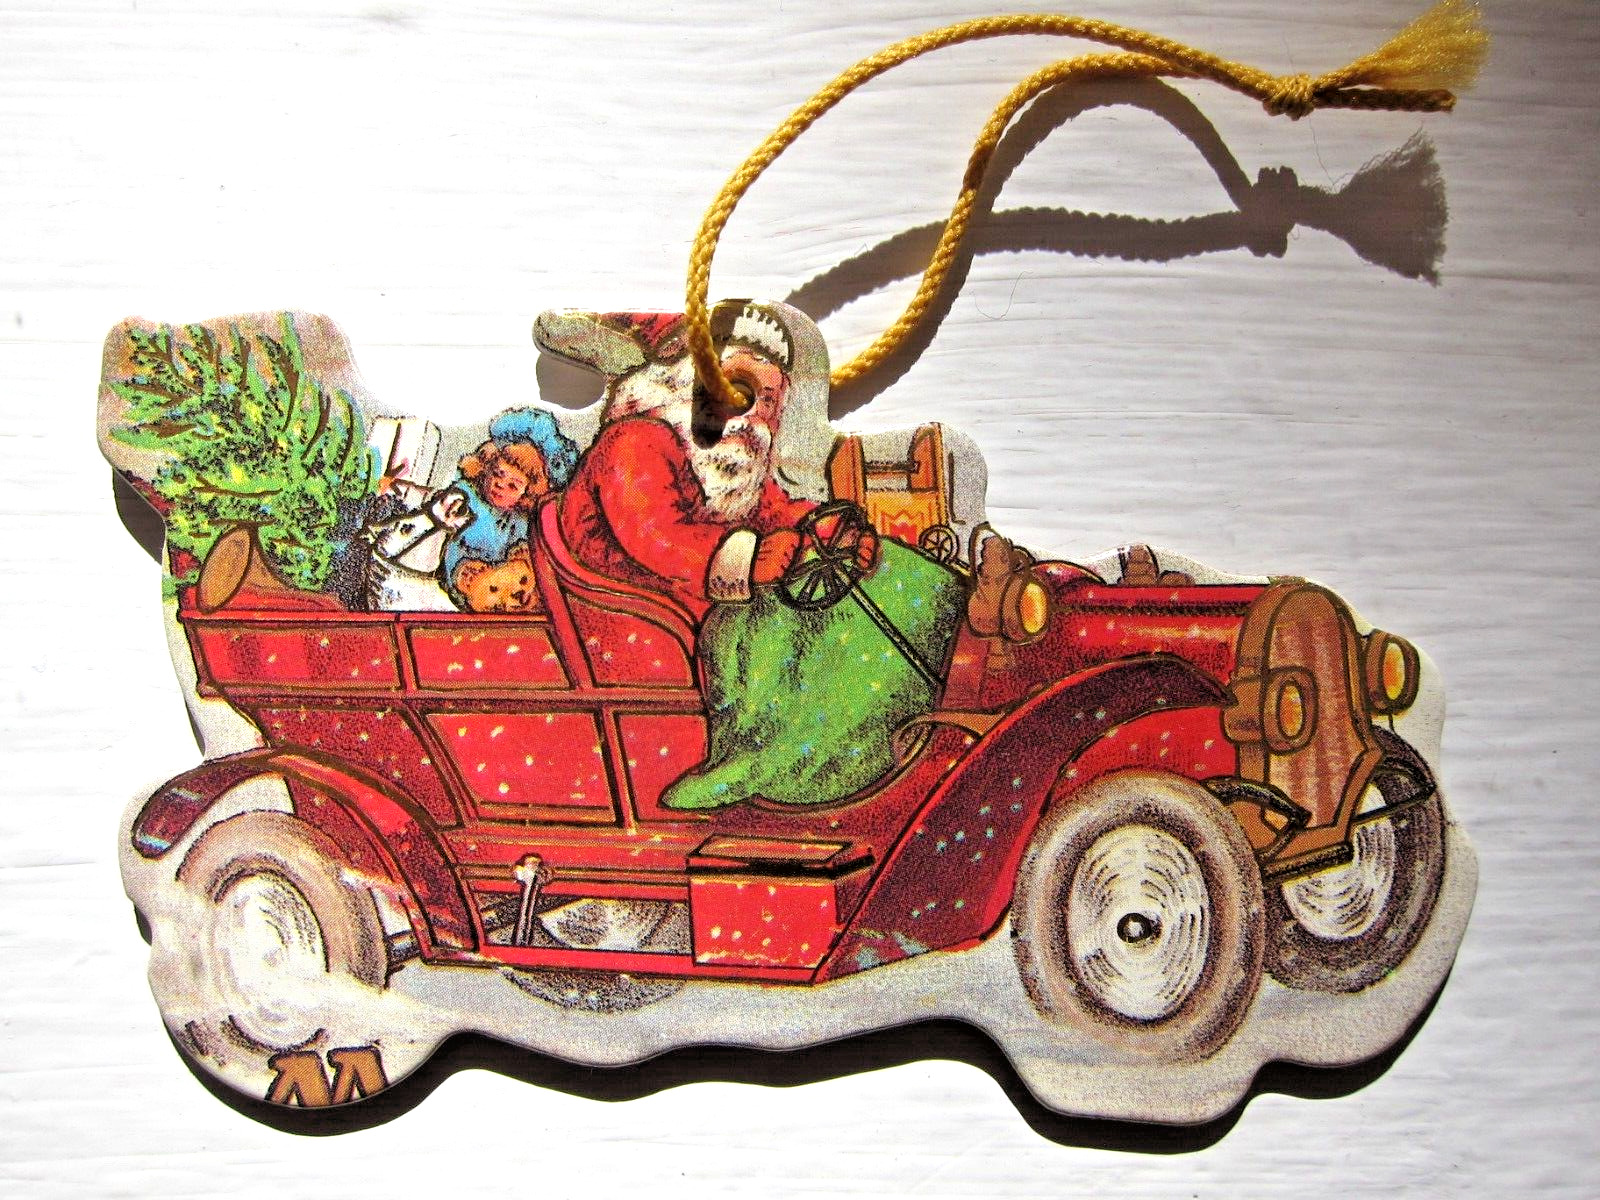 Vintage Die Cut Cardboard Christmas Ornament/Decor Santa Claus in Antique Car